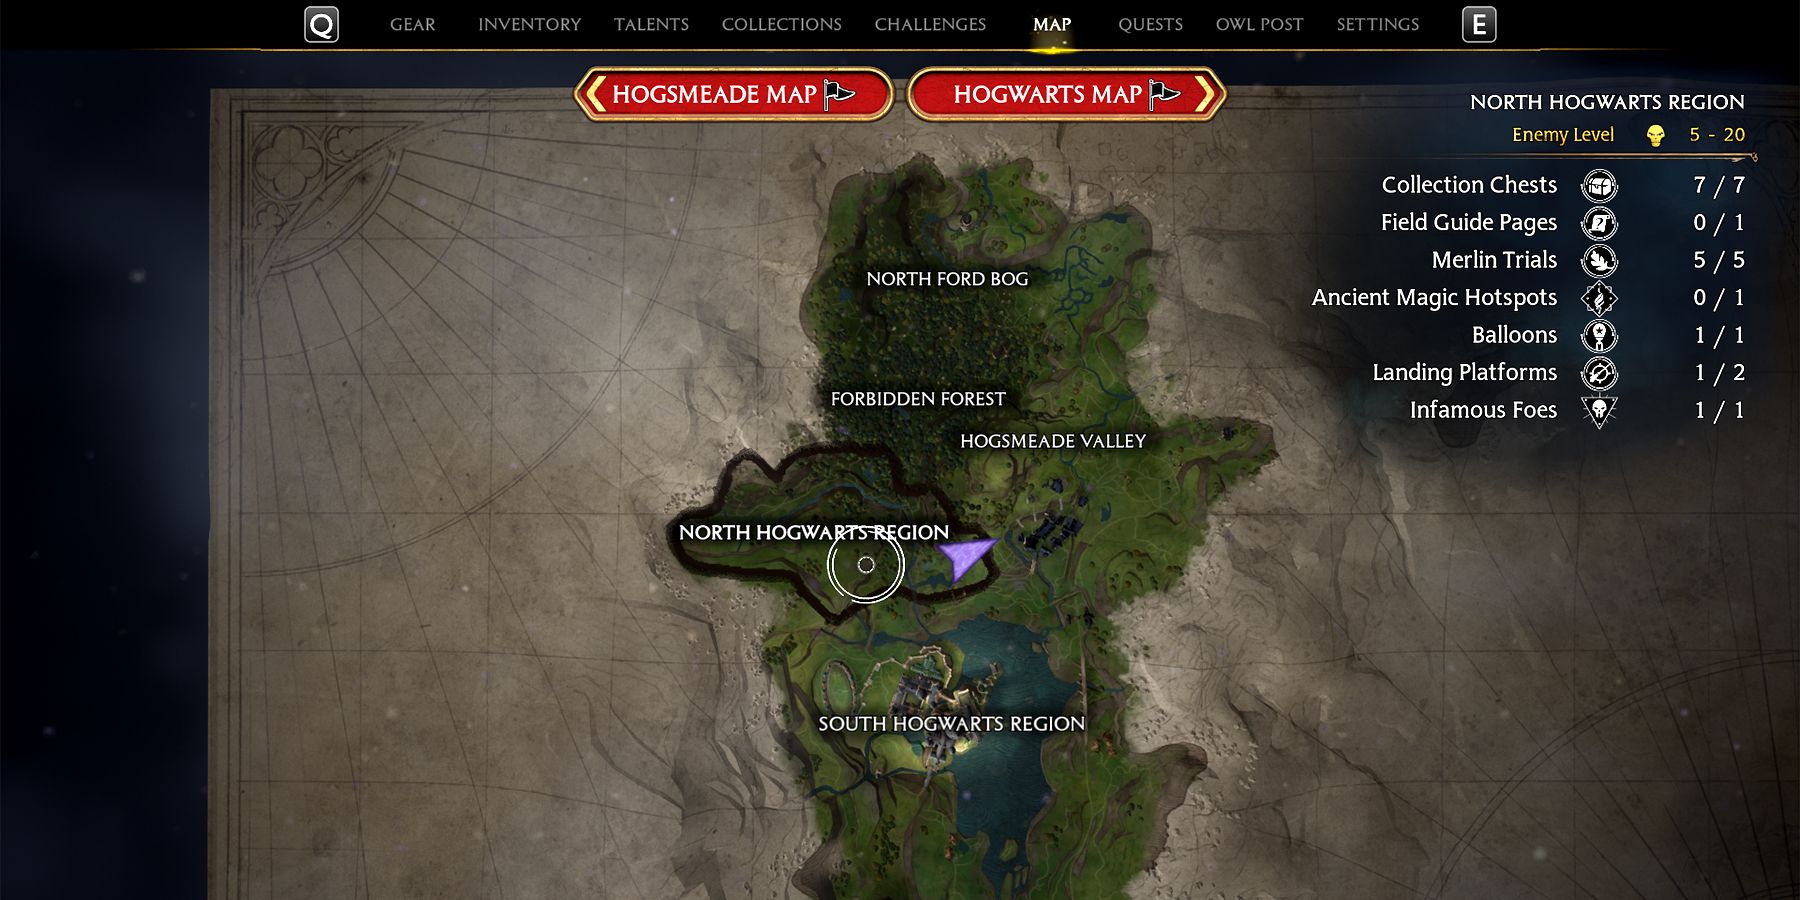 North Hogwarts Region Guide - Hogwarts Legacy Guide - IGN